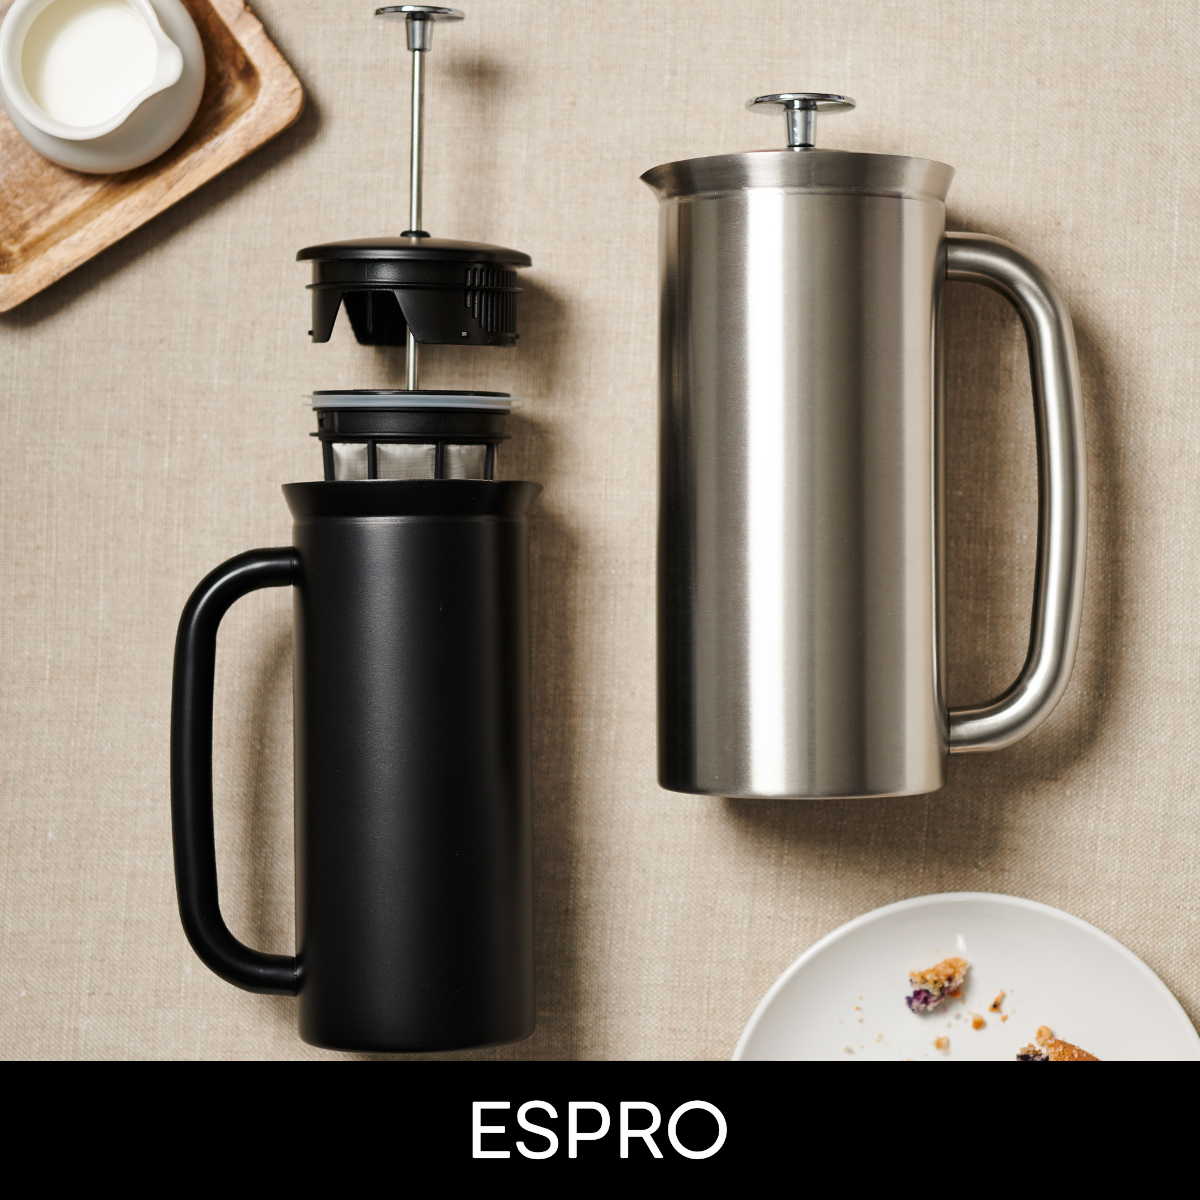 ESPRO Coffee